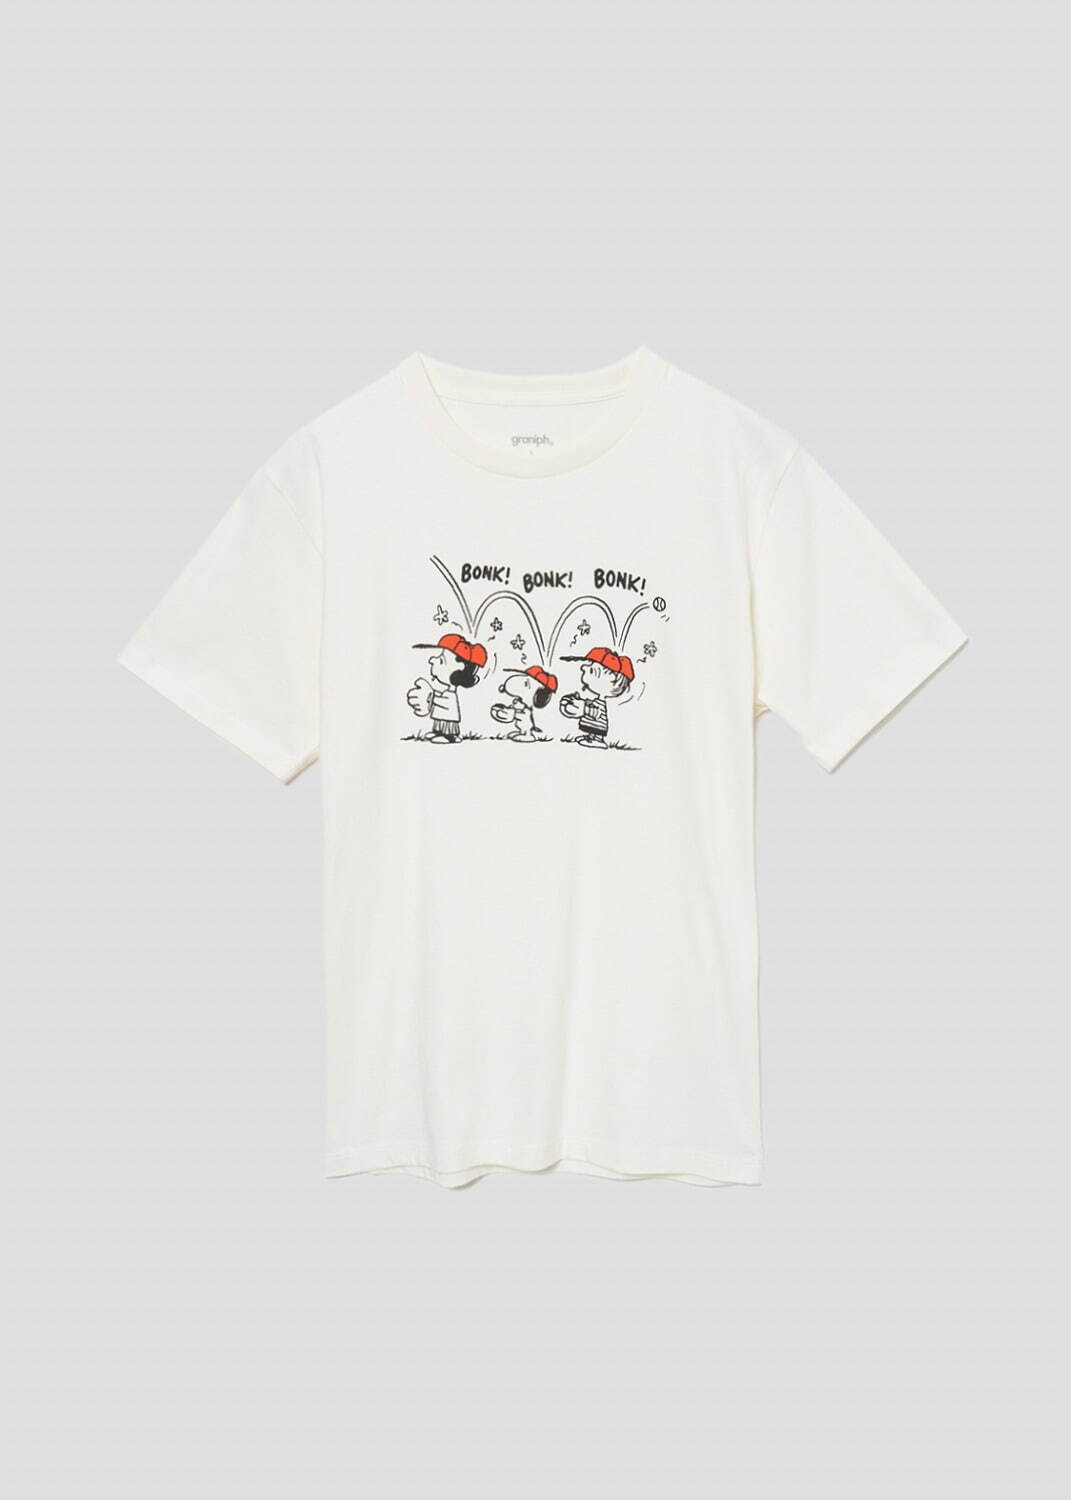 Tシャツ 3,500円